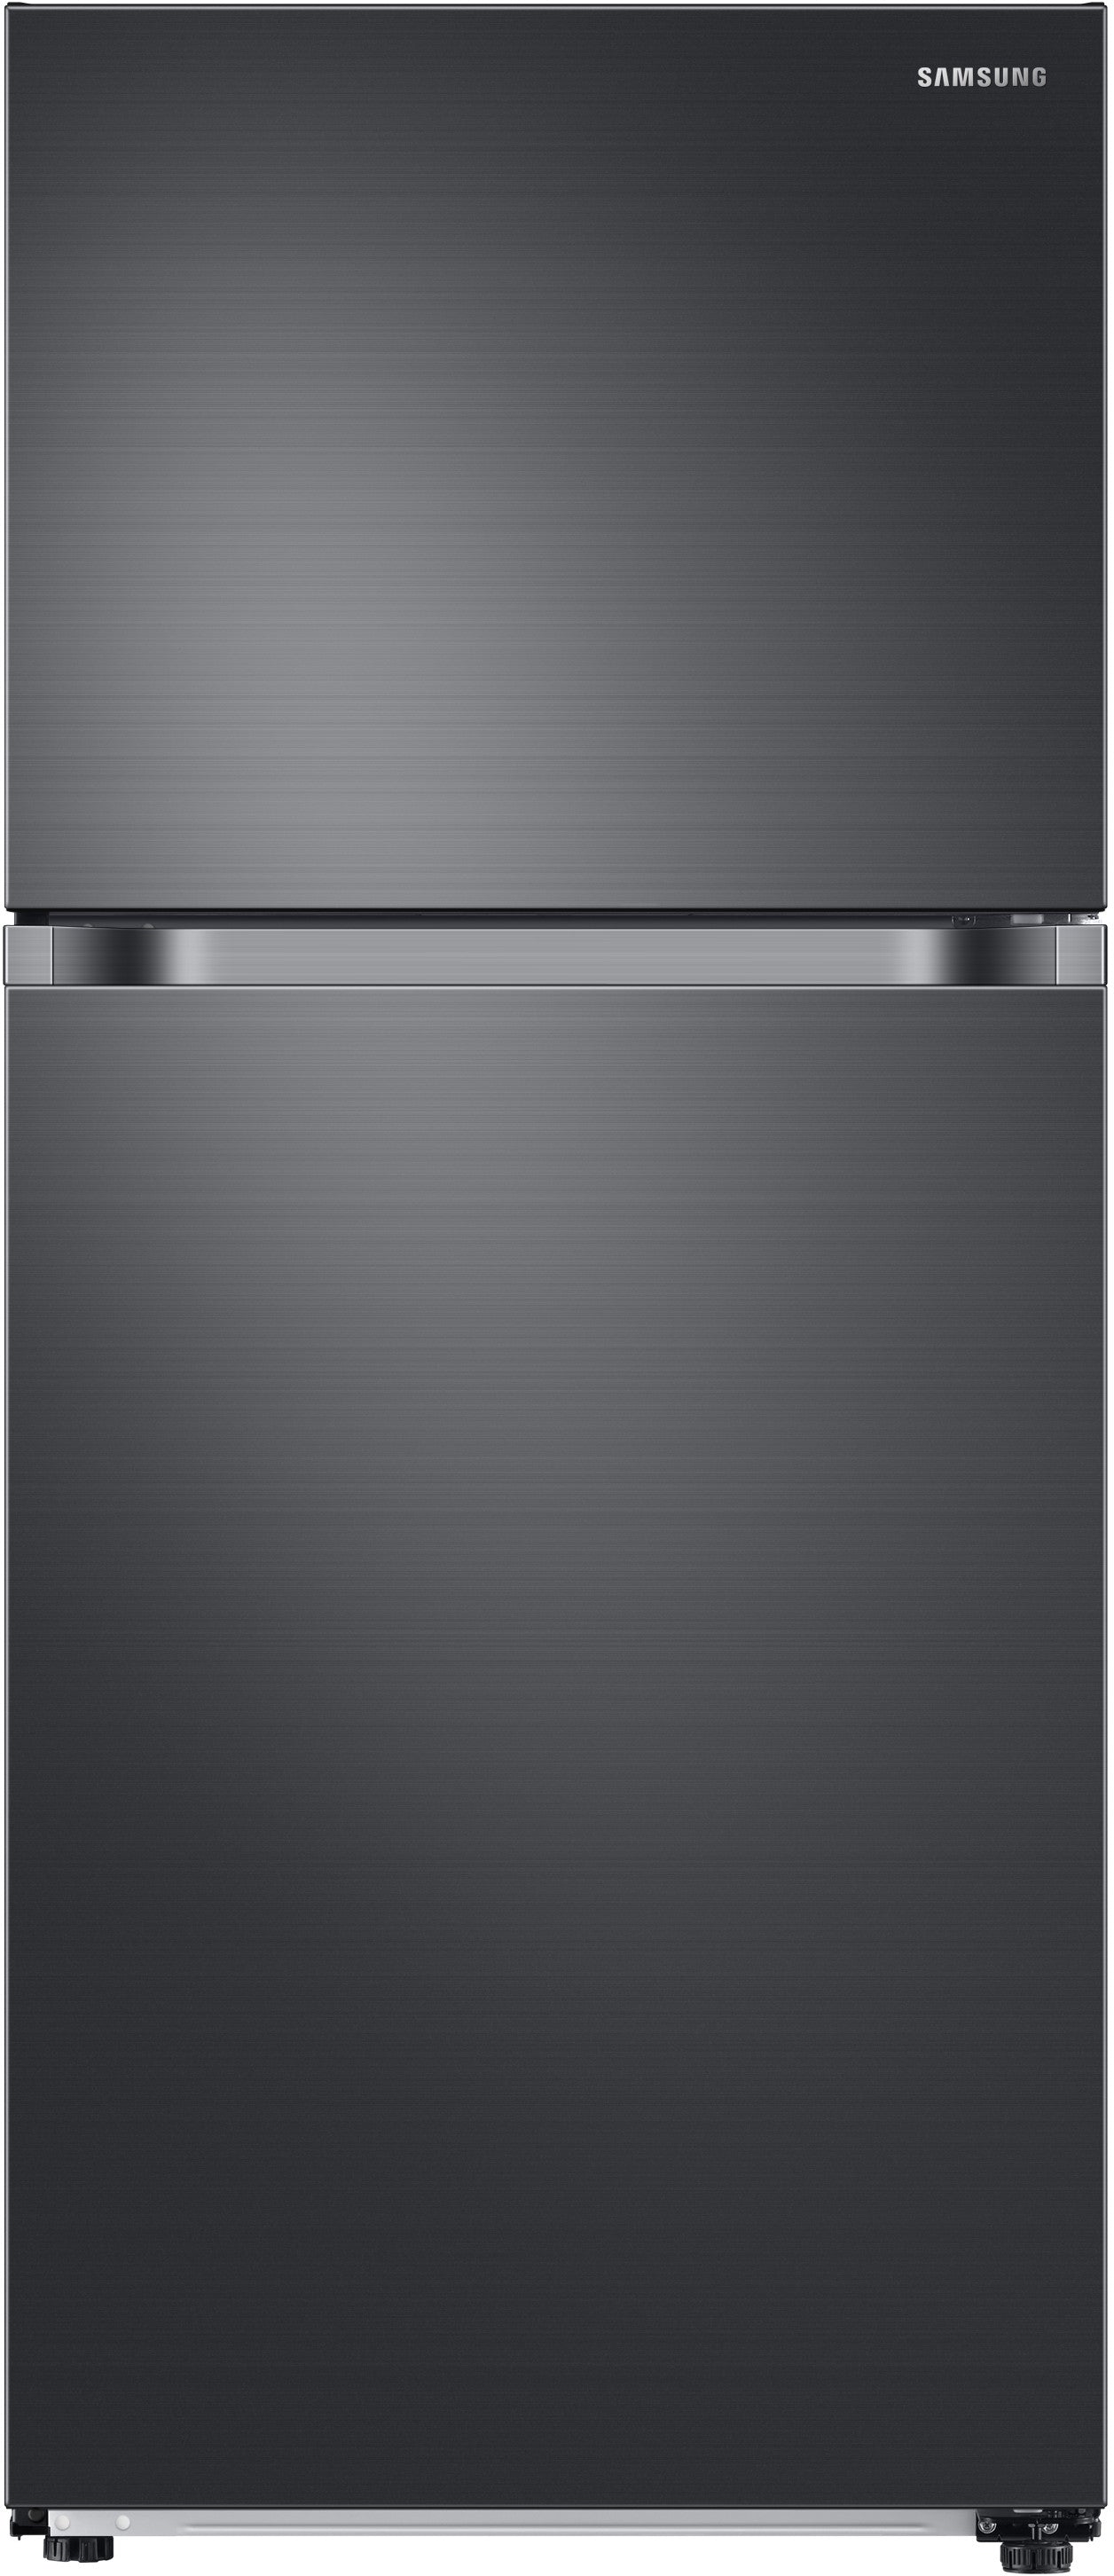 Samsung RT18M6213SG/AA 18 Cu. Ft. Top Freezer Refrigerator With Flex zone - Samsung Parts USA